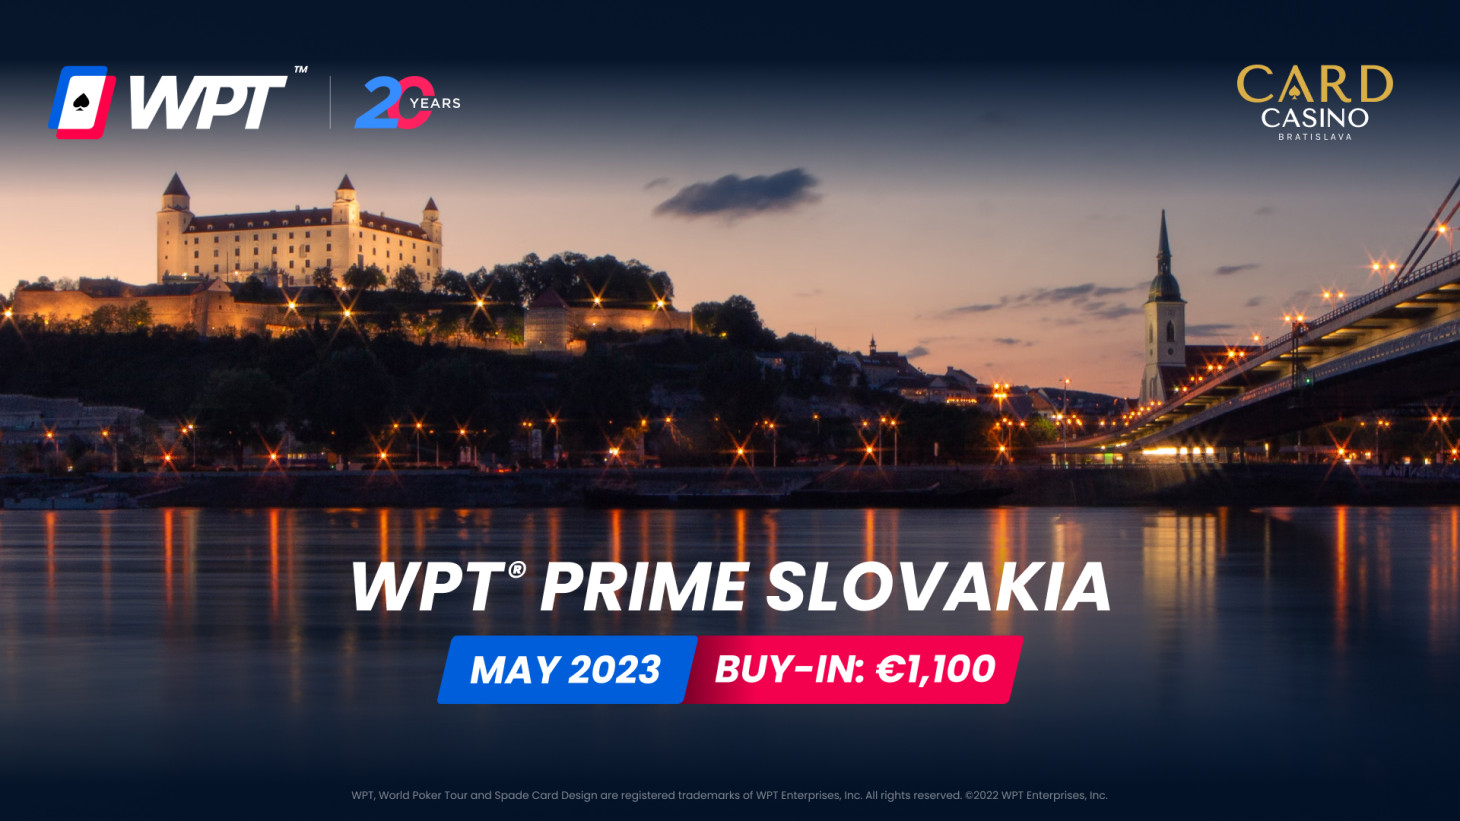 Poker-Bombe! Card Casino begrüßt das World Poker Tour® PRIME Slovakia-Turnier im Mai 2023